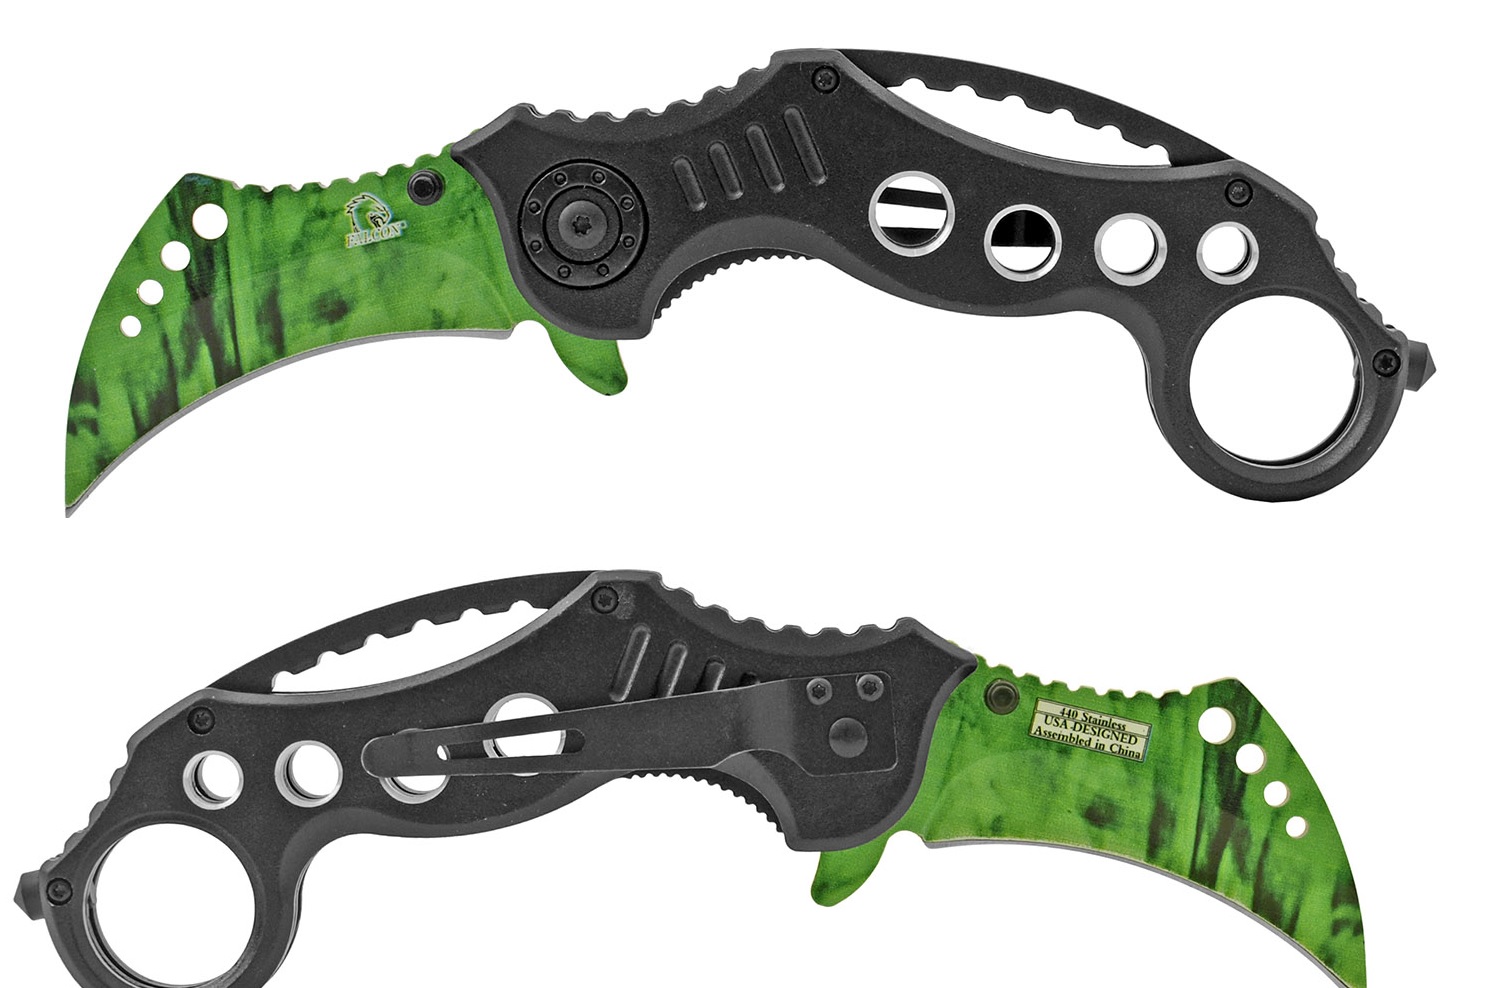 KNIFE - KS3293-6 Green Karambit